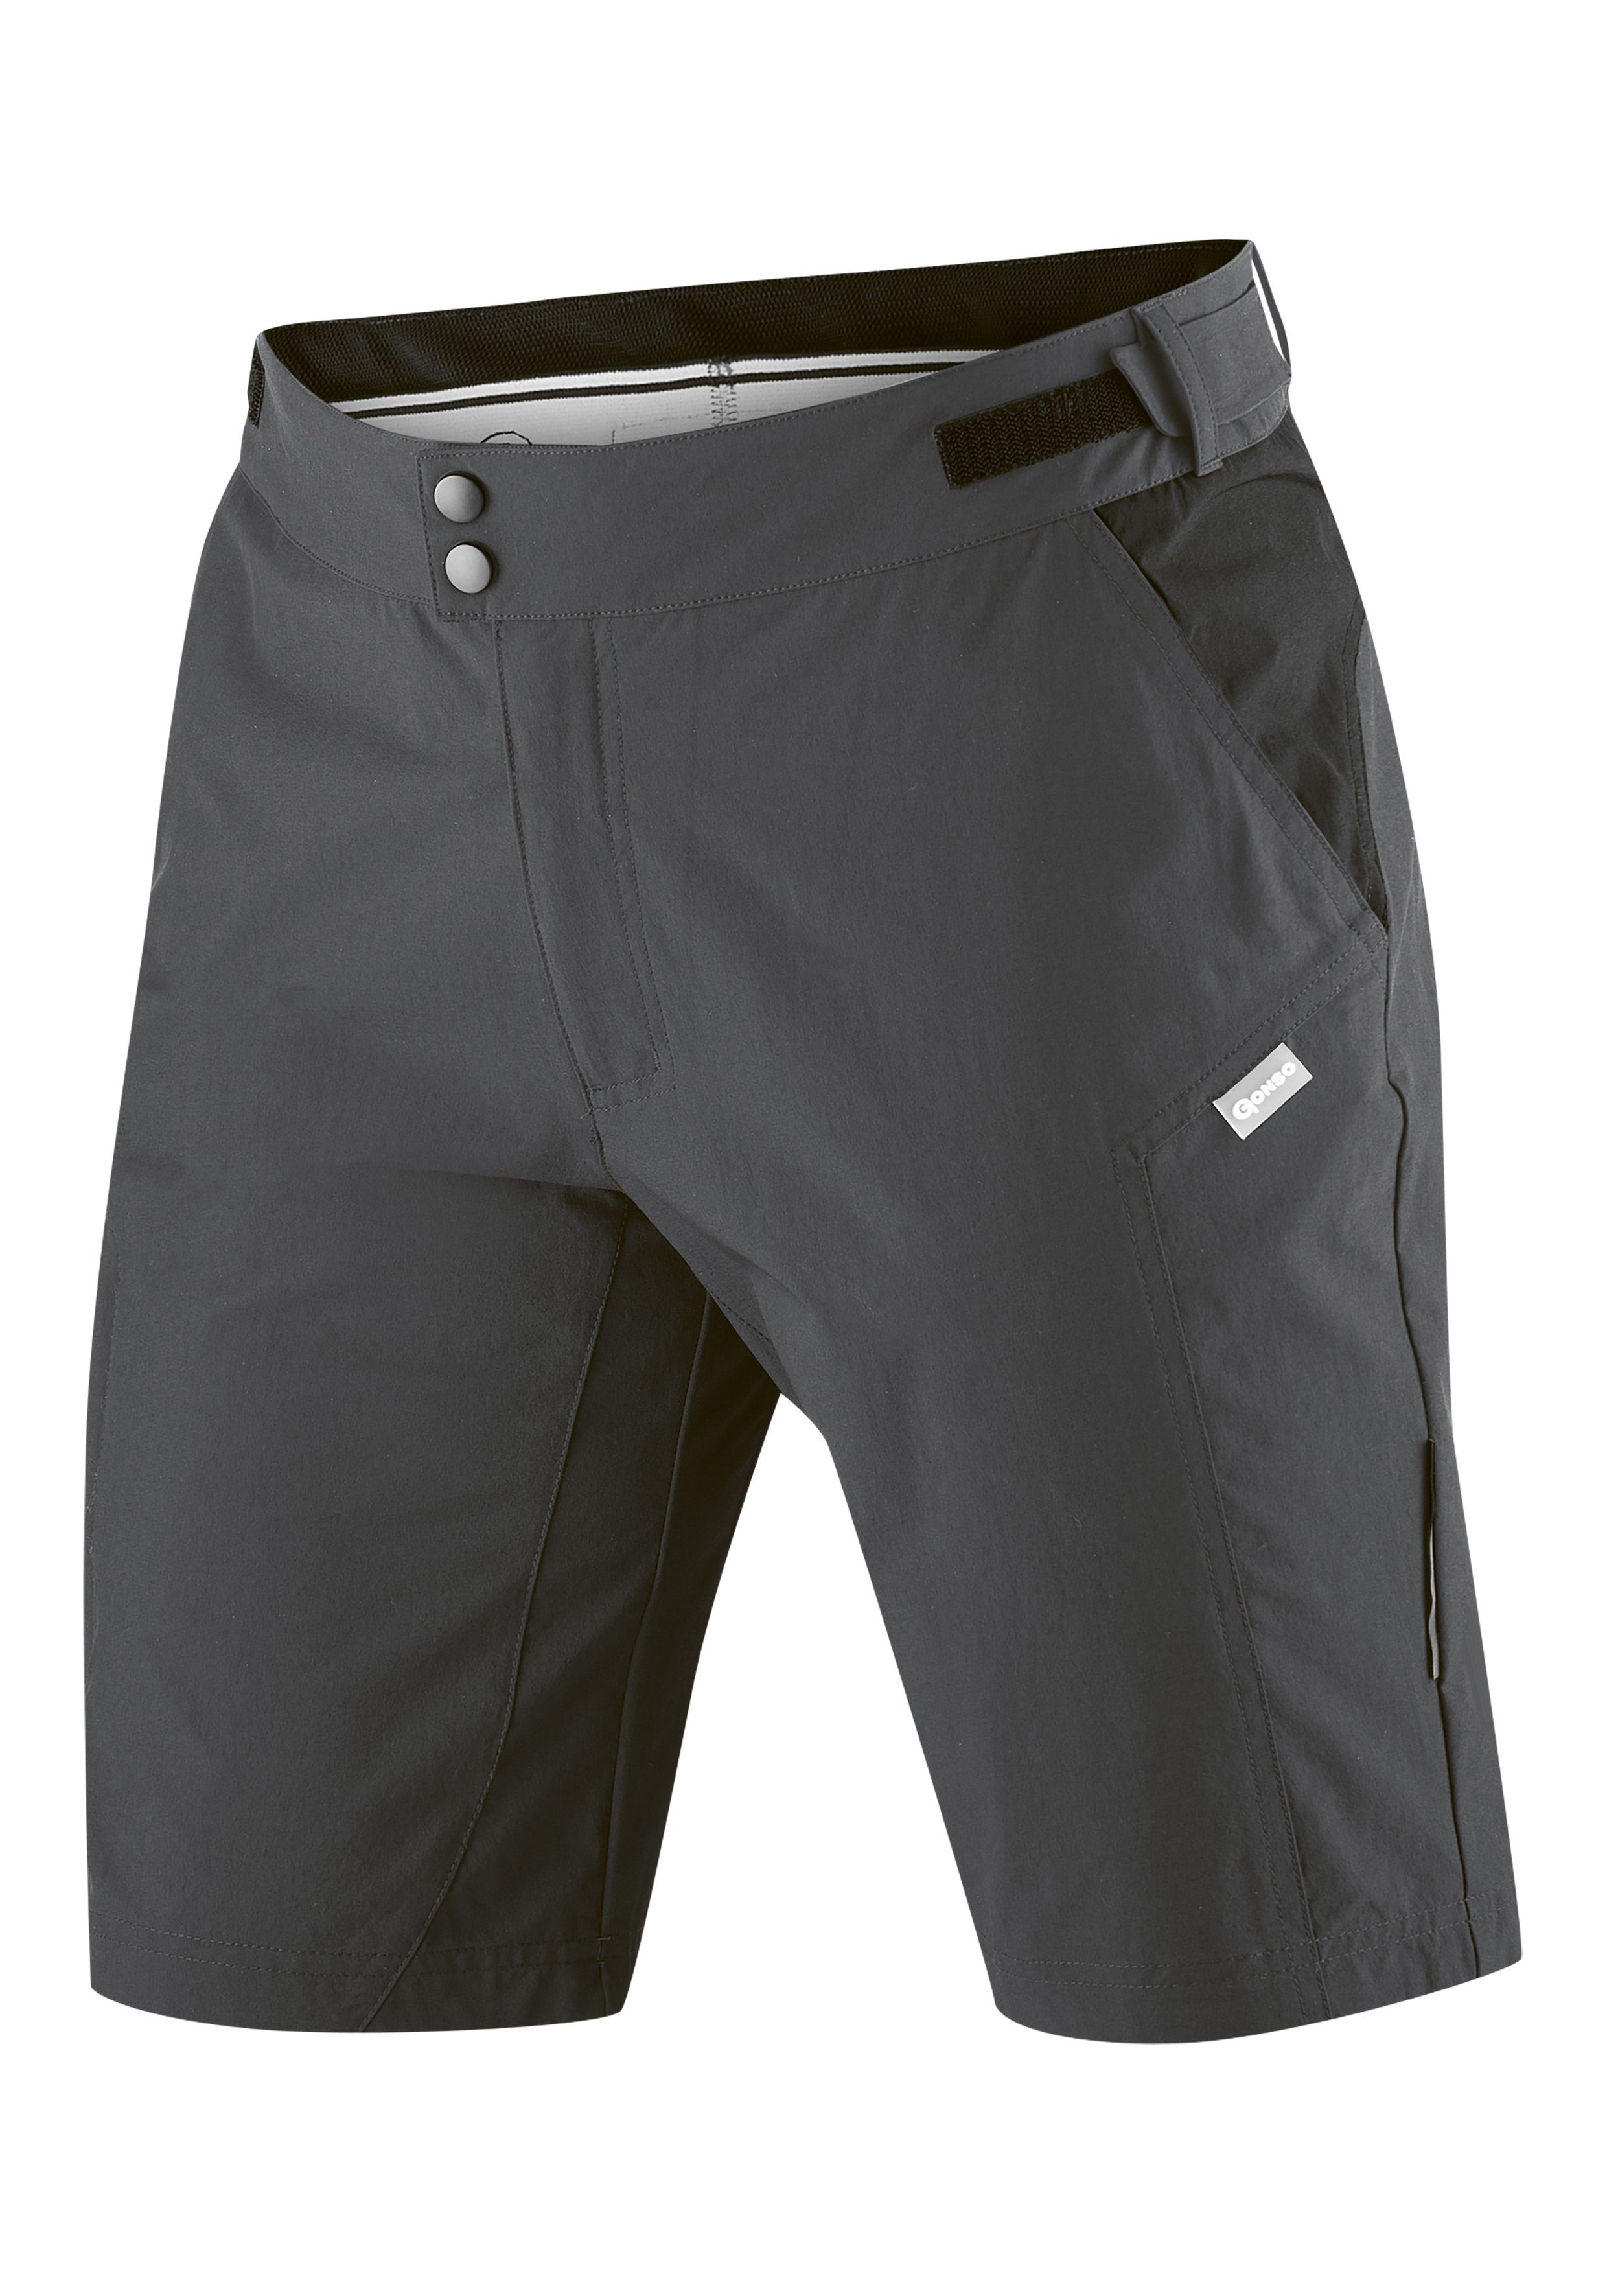 Gonso Fahrradhose MUR MTB-Shorts aus elastischem, robustem Material